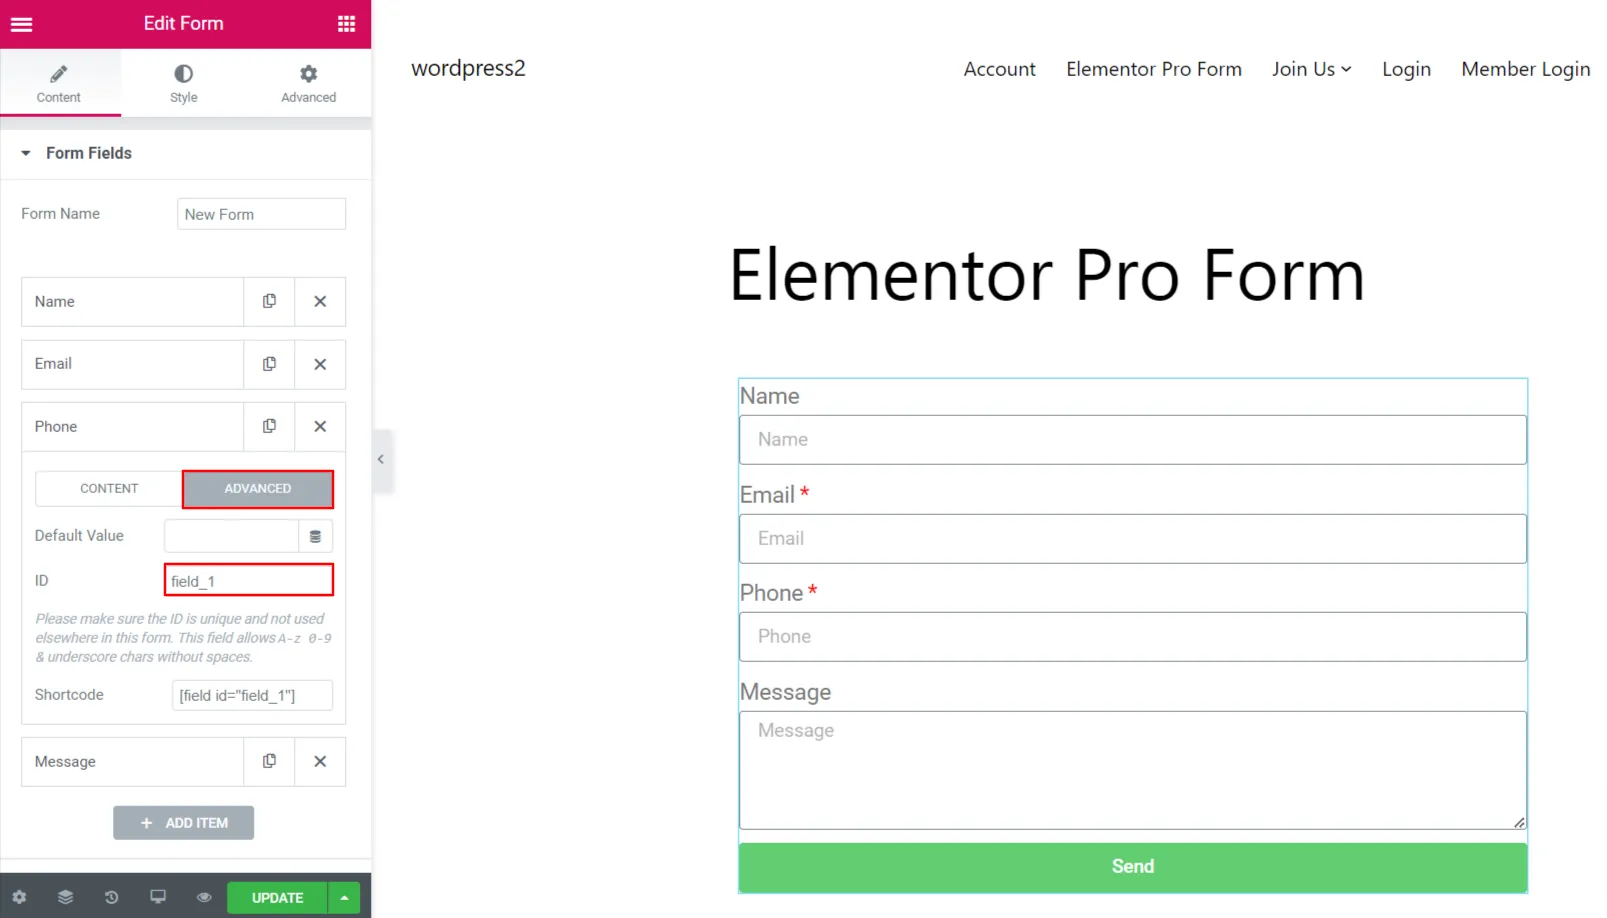 Elementor Pro Form - Note Phone field ID